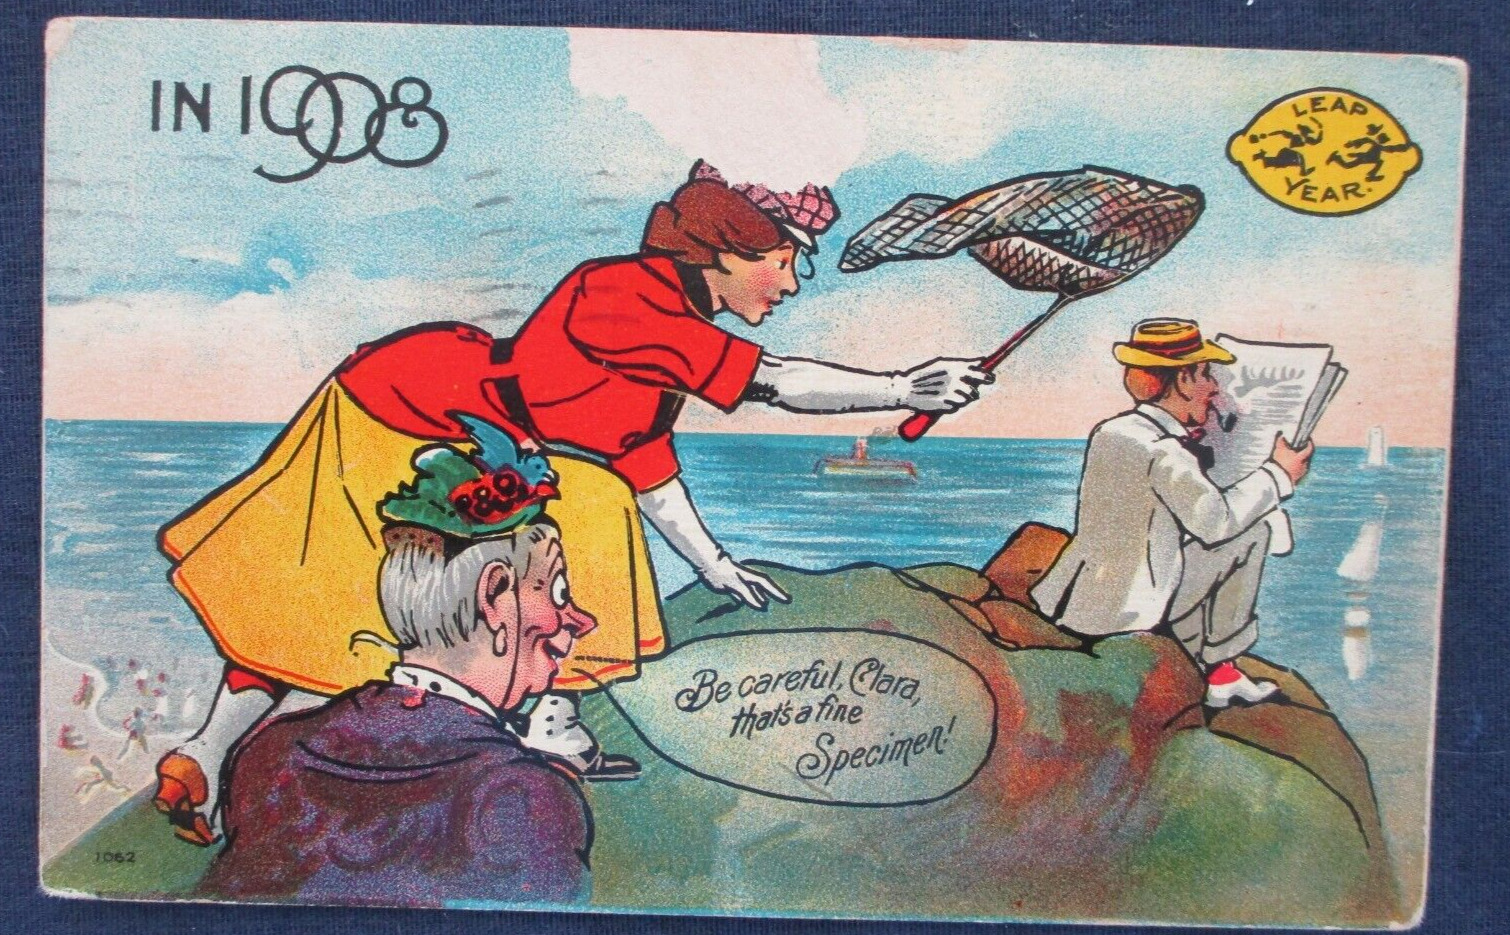 1908 Leap Year Comic Greeting Postcard